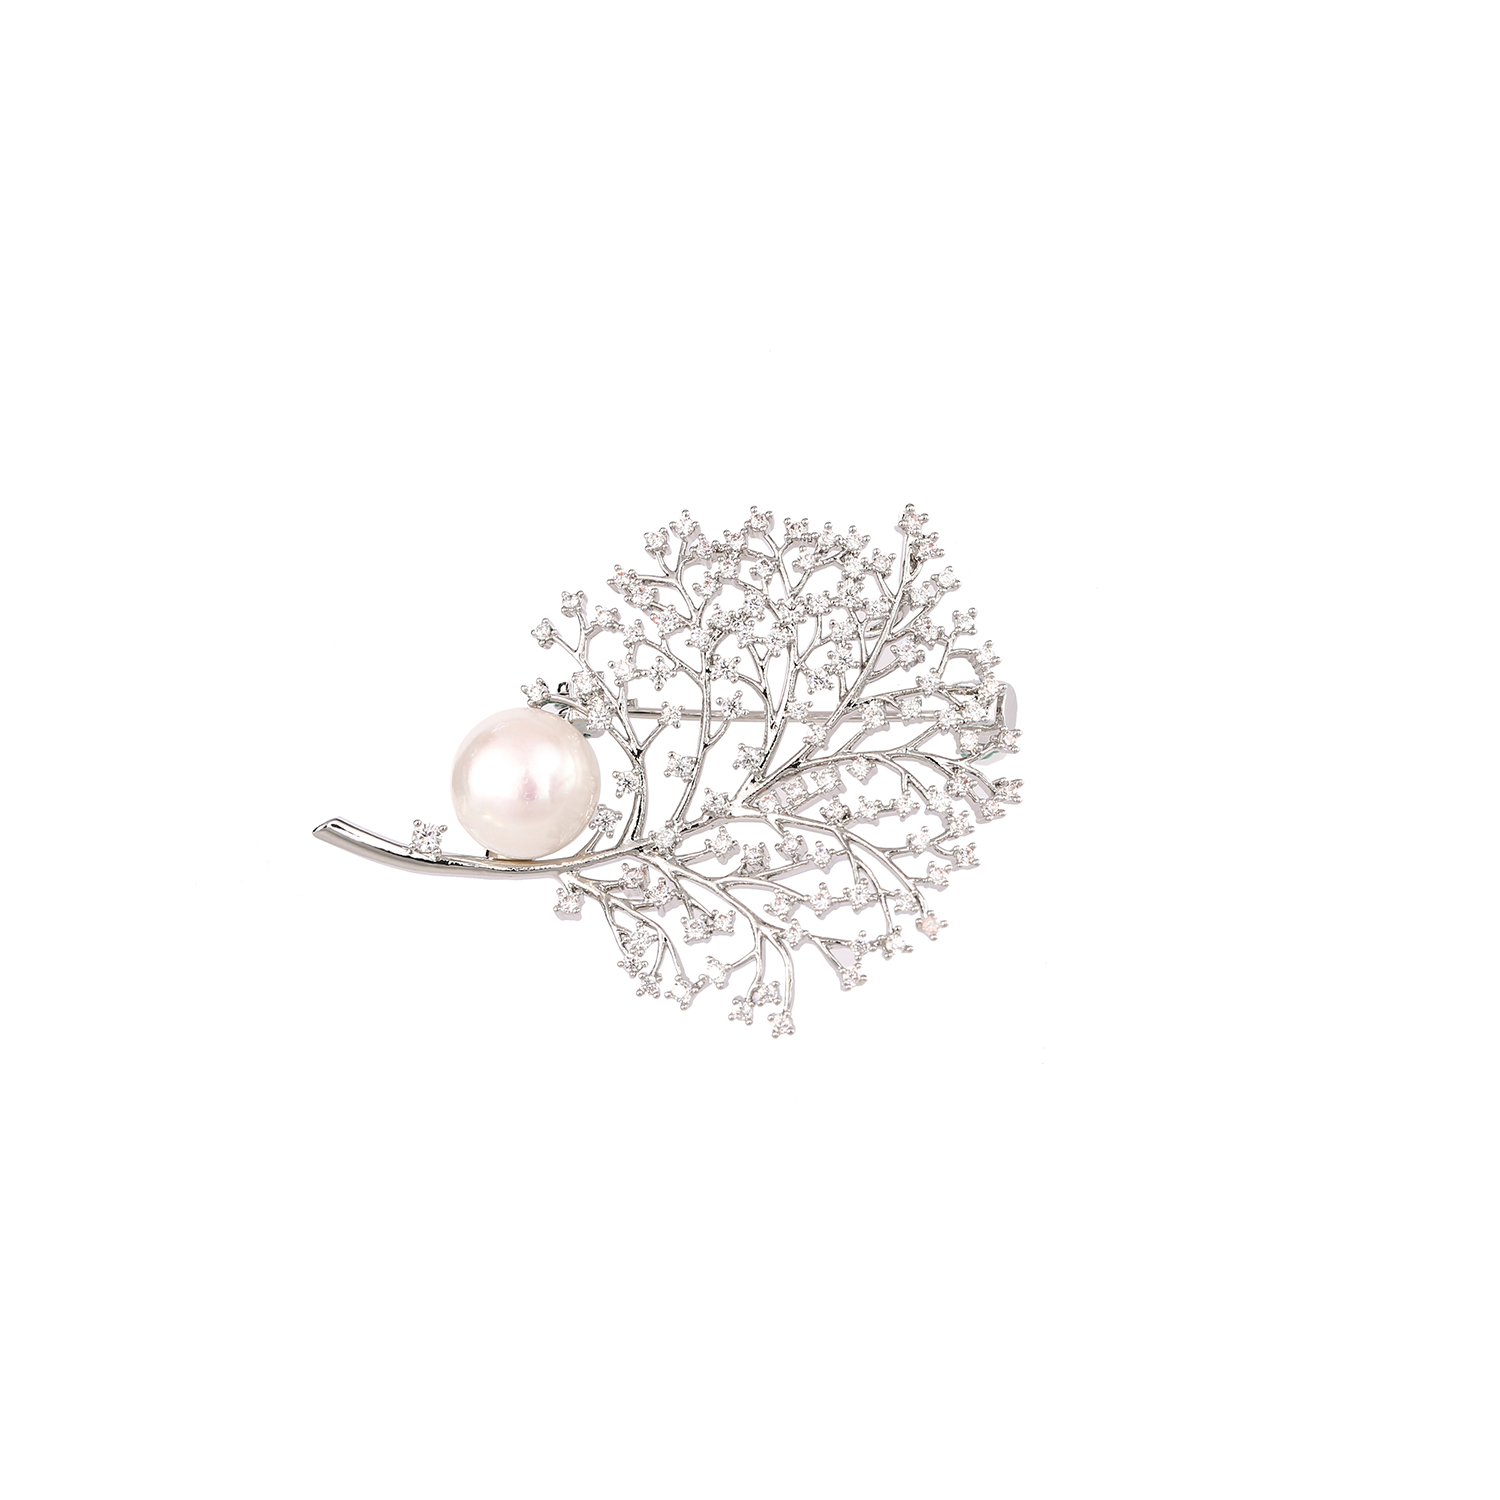 Broche feuille de noël en cuivre plaqué or et Zircon, support vide de corsage en perles, broche personnalisée